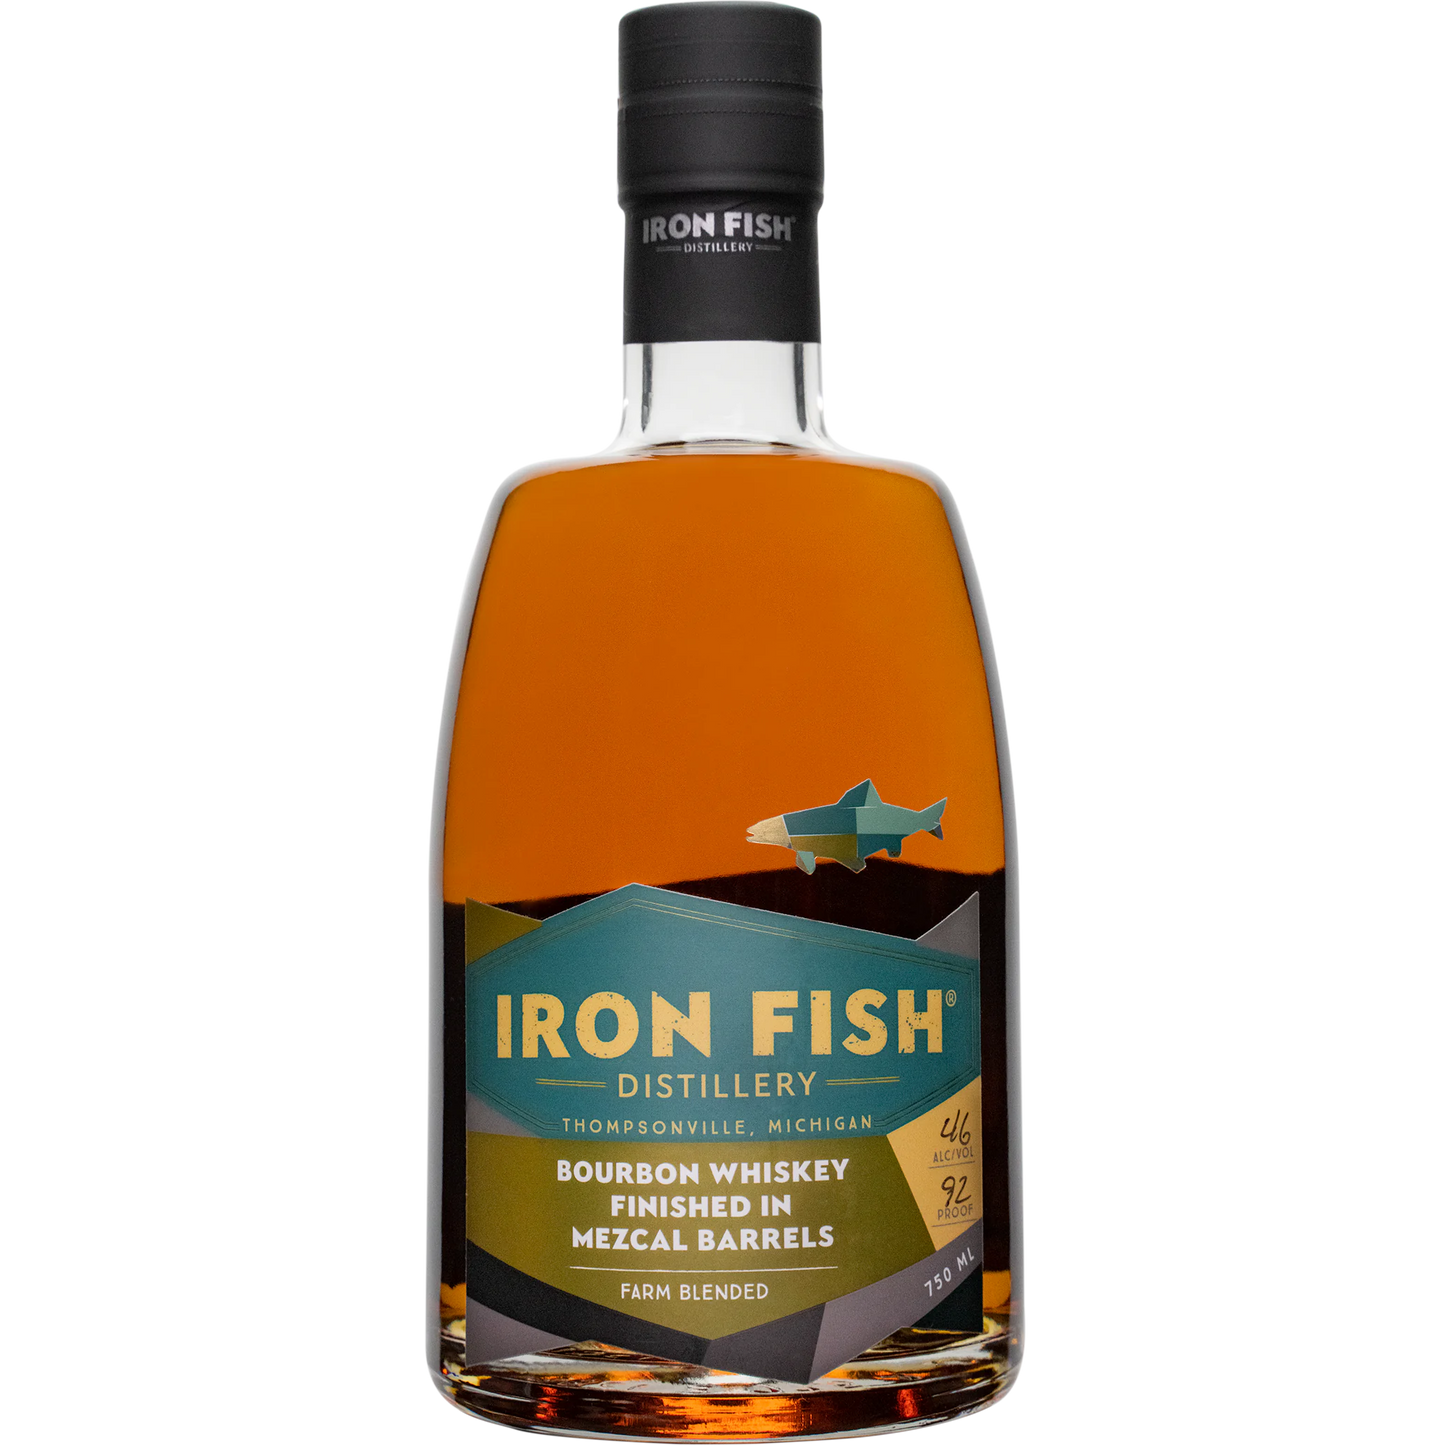 Iron Fish Distillery Bourbon Finished in Mezcal Barrels